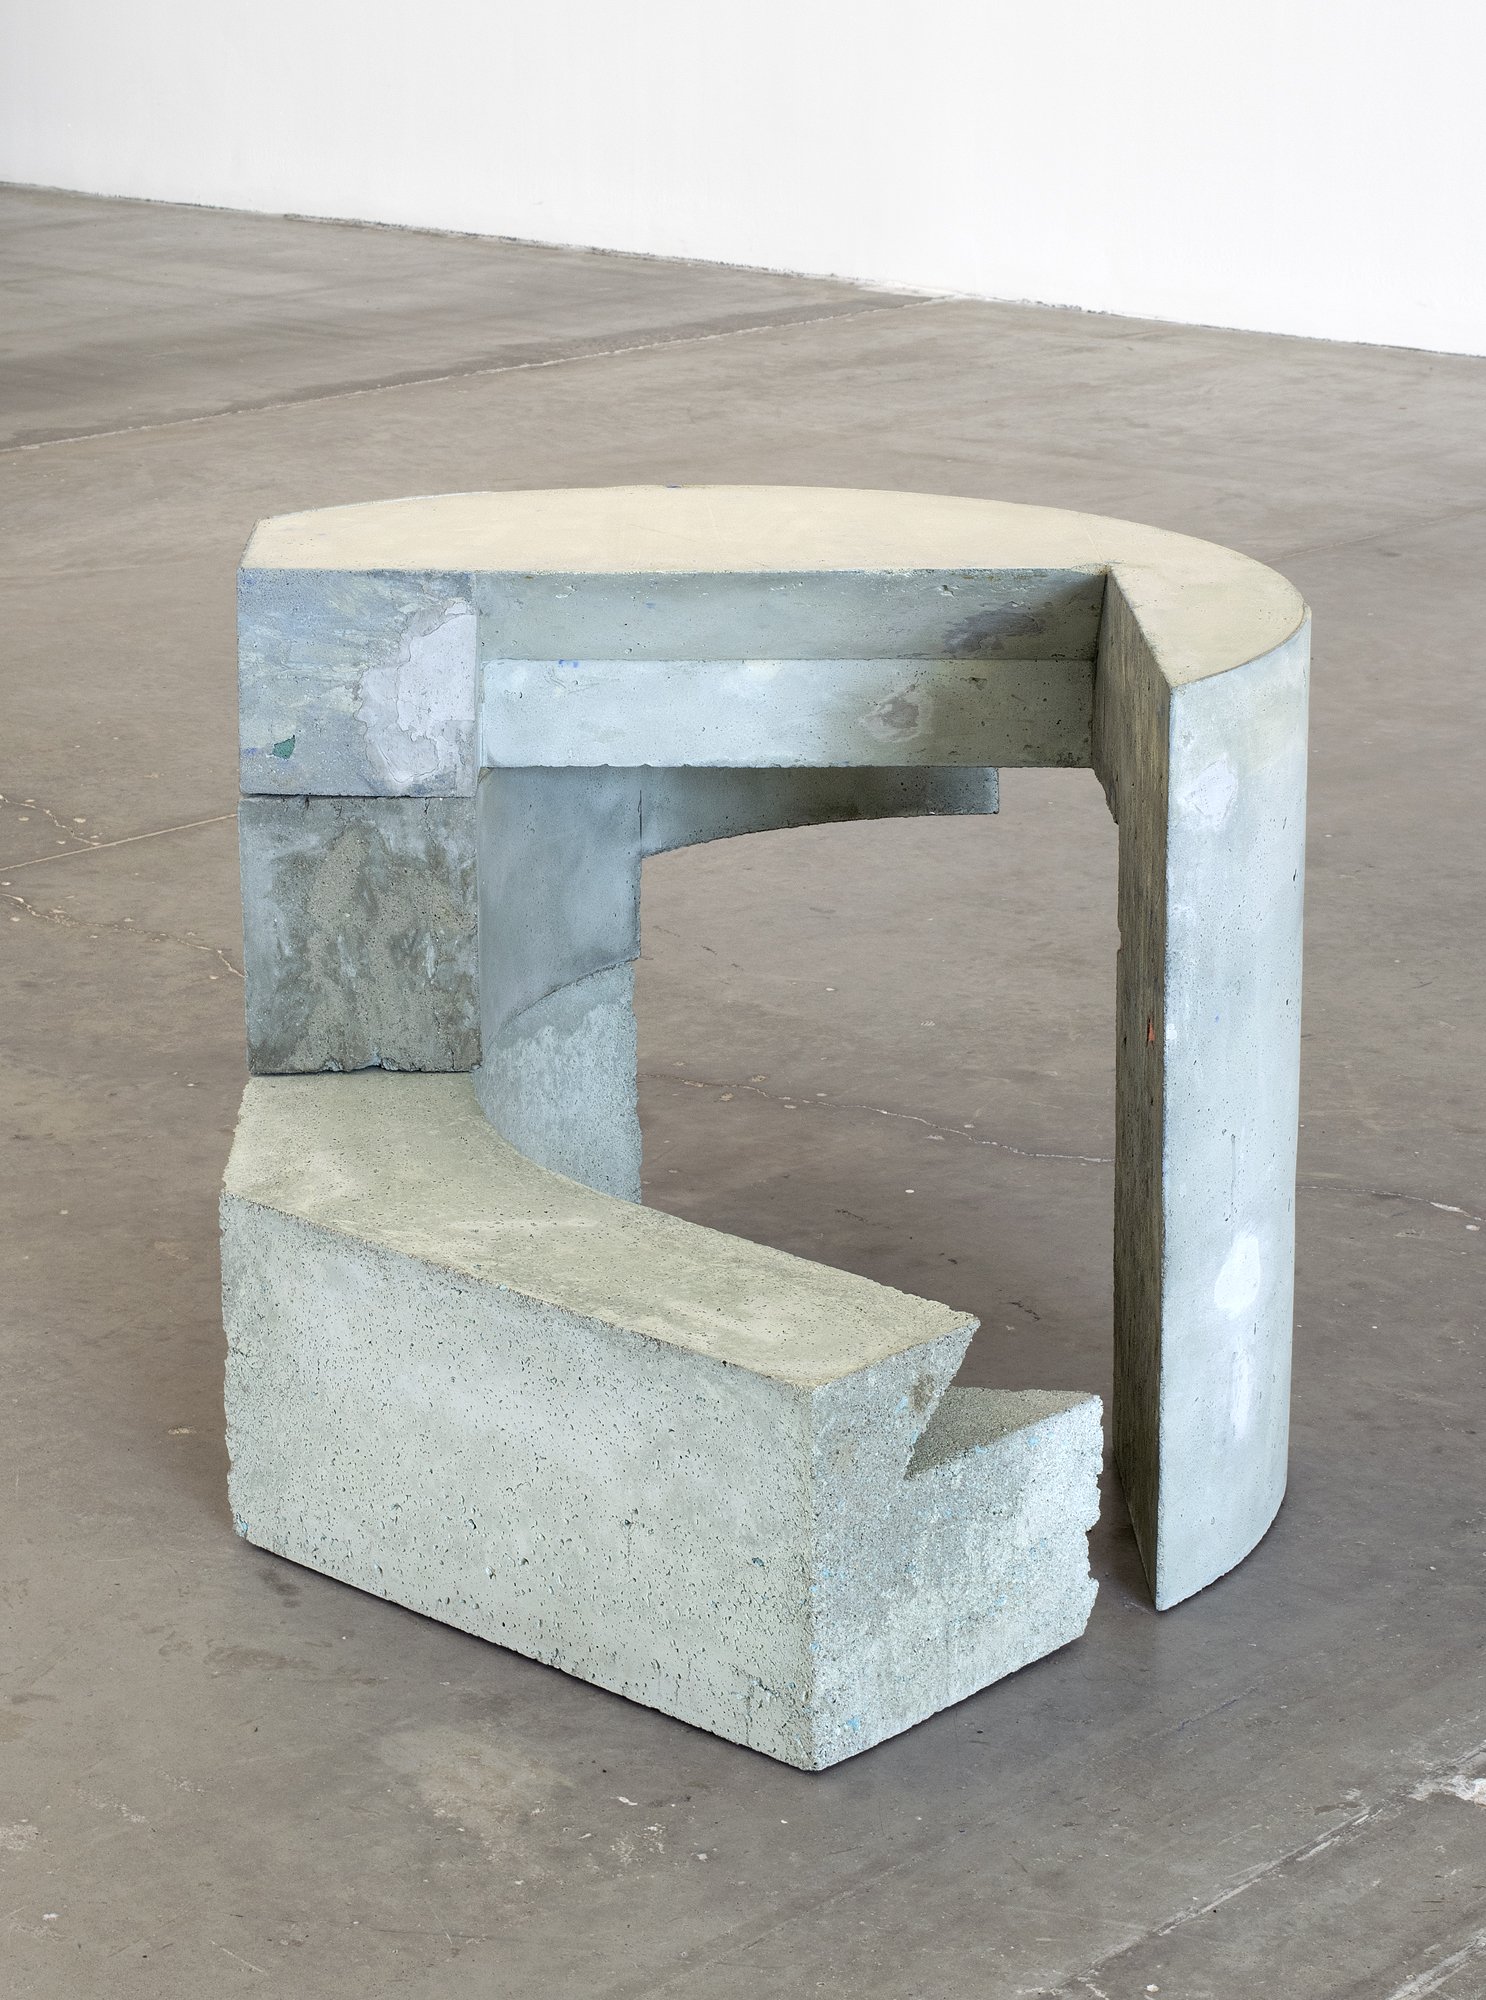   Lunopel , 2016, concrete and foam, 23 x 36 x 32 in 